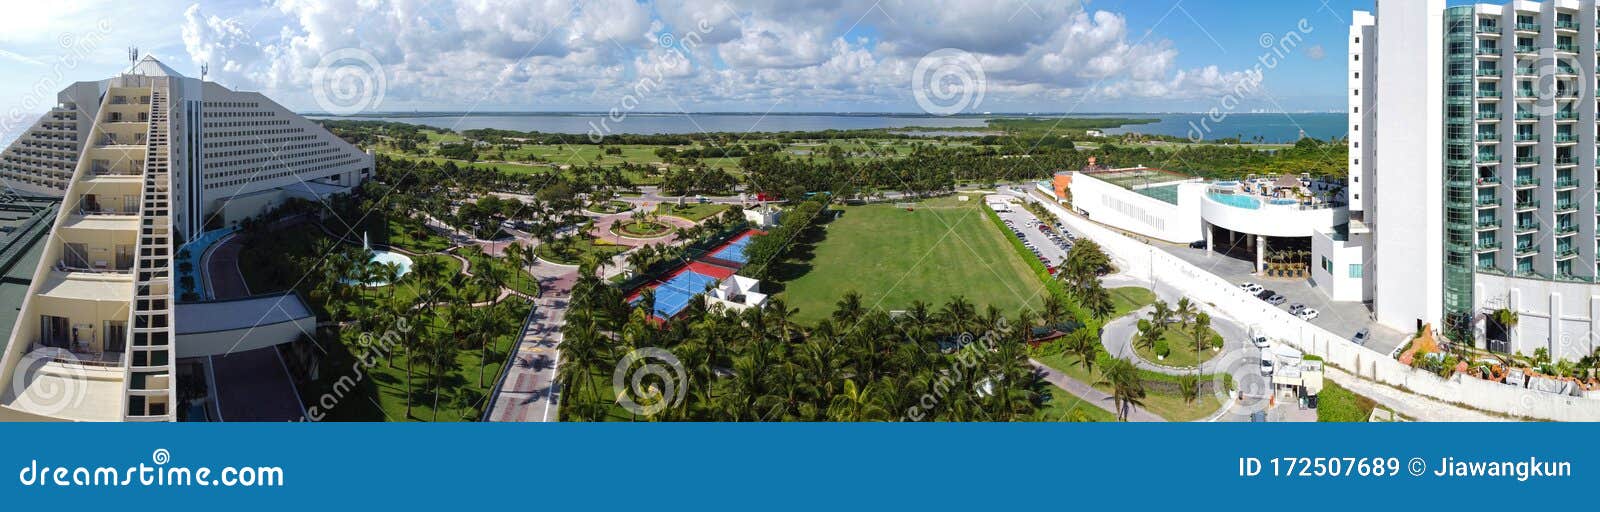 cancun iberostar resort and lagoon aerial view, quintana roo, mexico